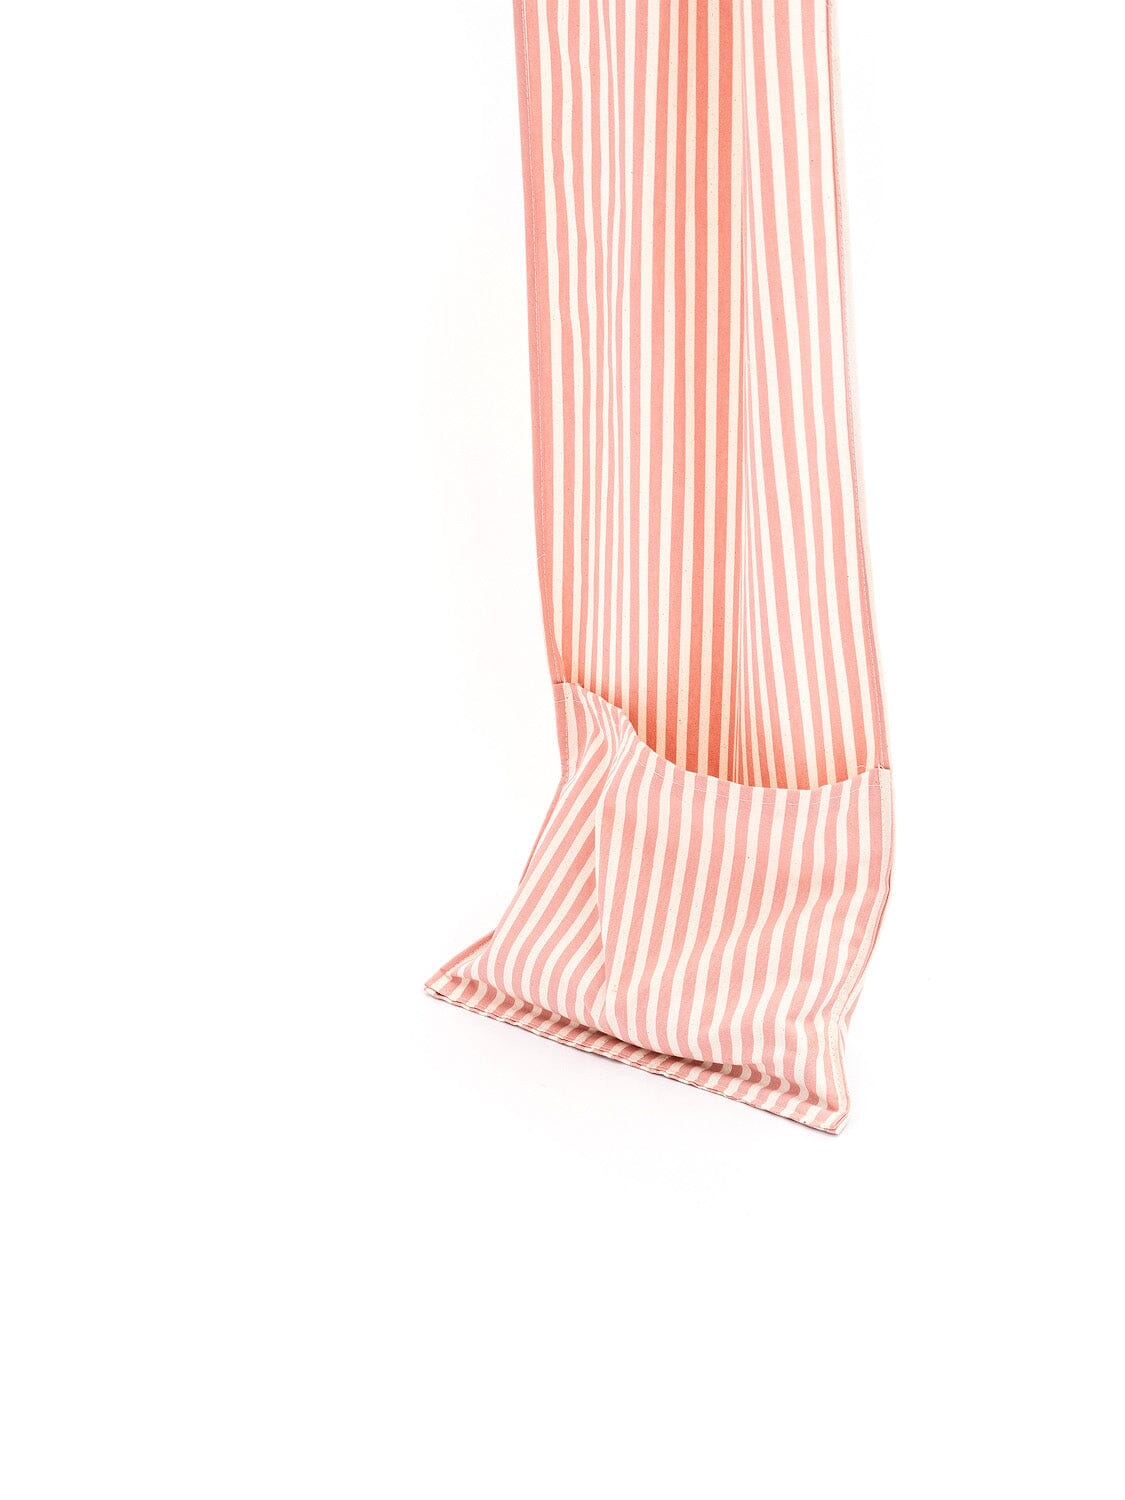 The XL Cabana - Lauren's Pink Stripe